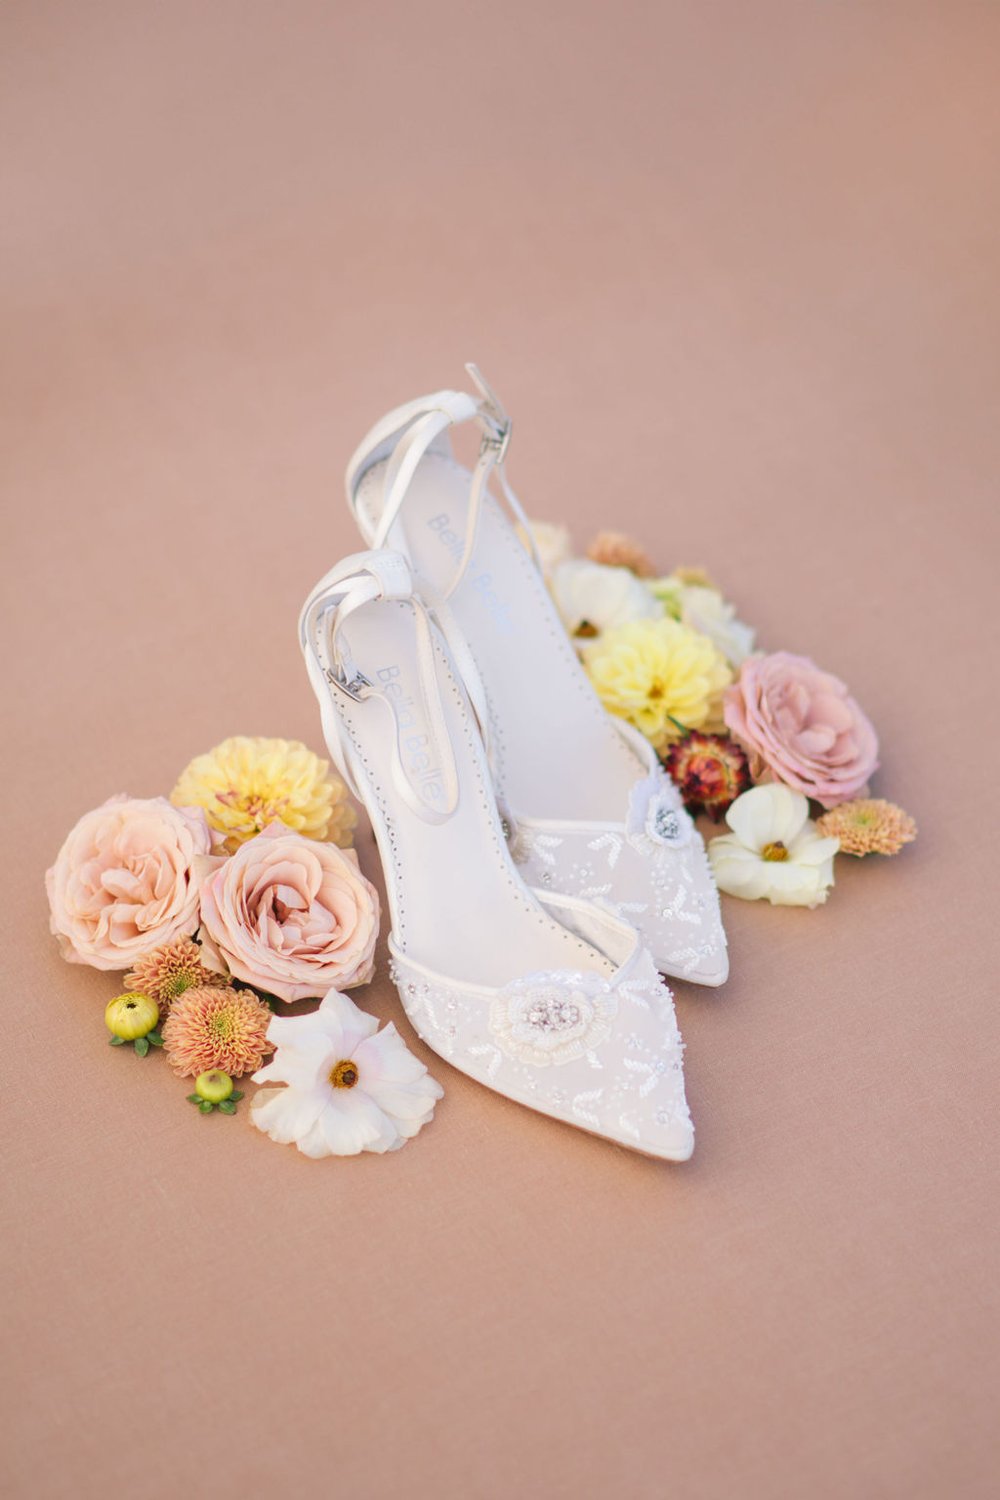 Bella Belle Wedding shoes captured by Ugo Photography.